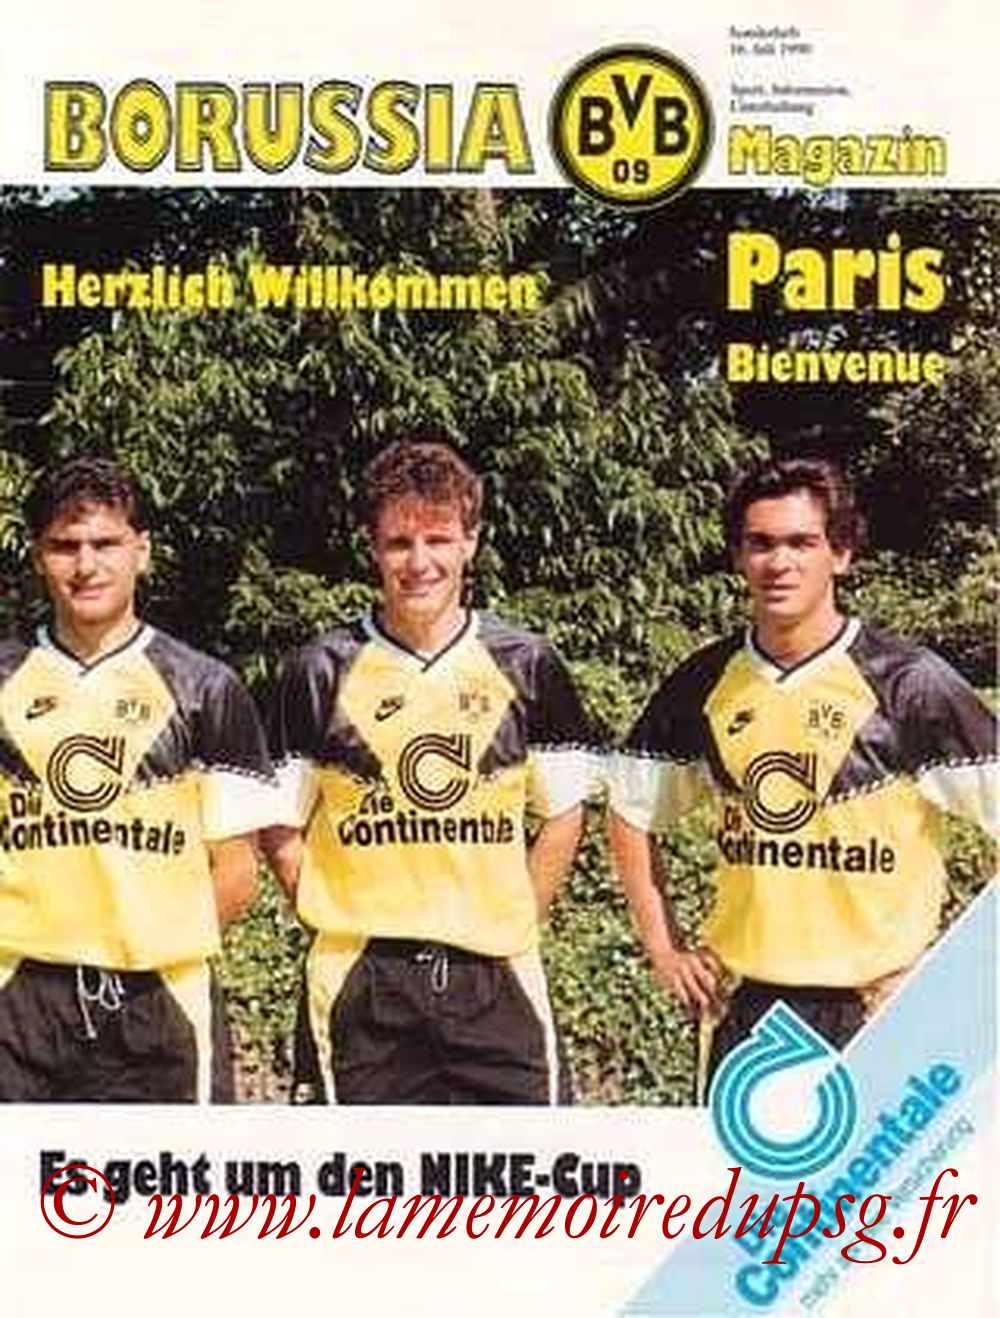 1990-07-16  Borussia Dortmund-PSG (Nike cup à Dortmund, Borussia Magazin)